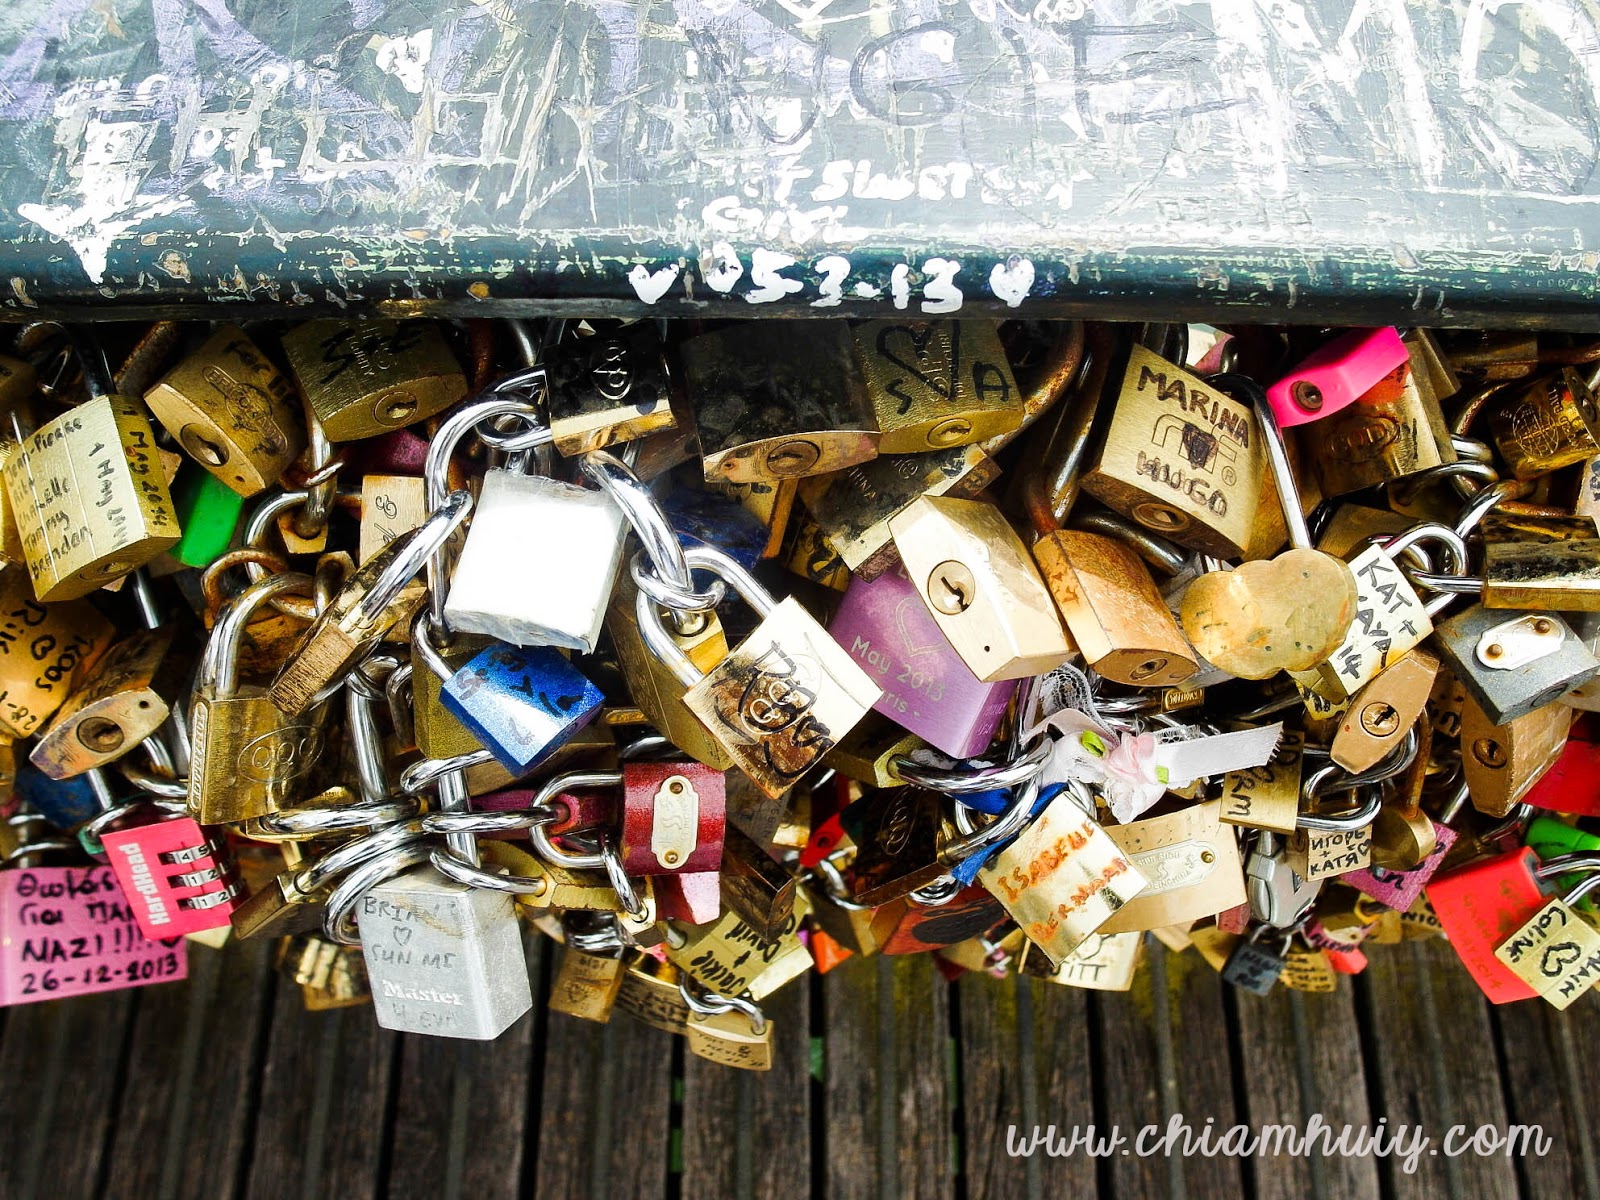 Paris+Love+locks+bridge